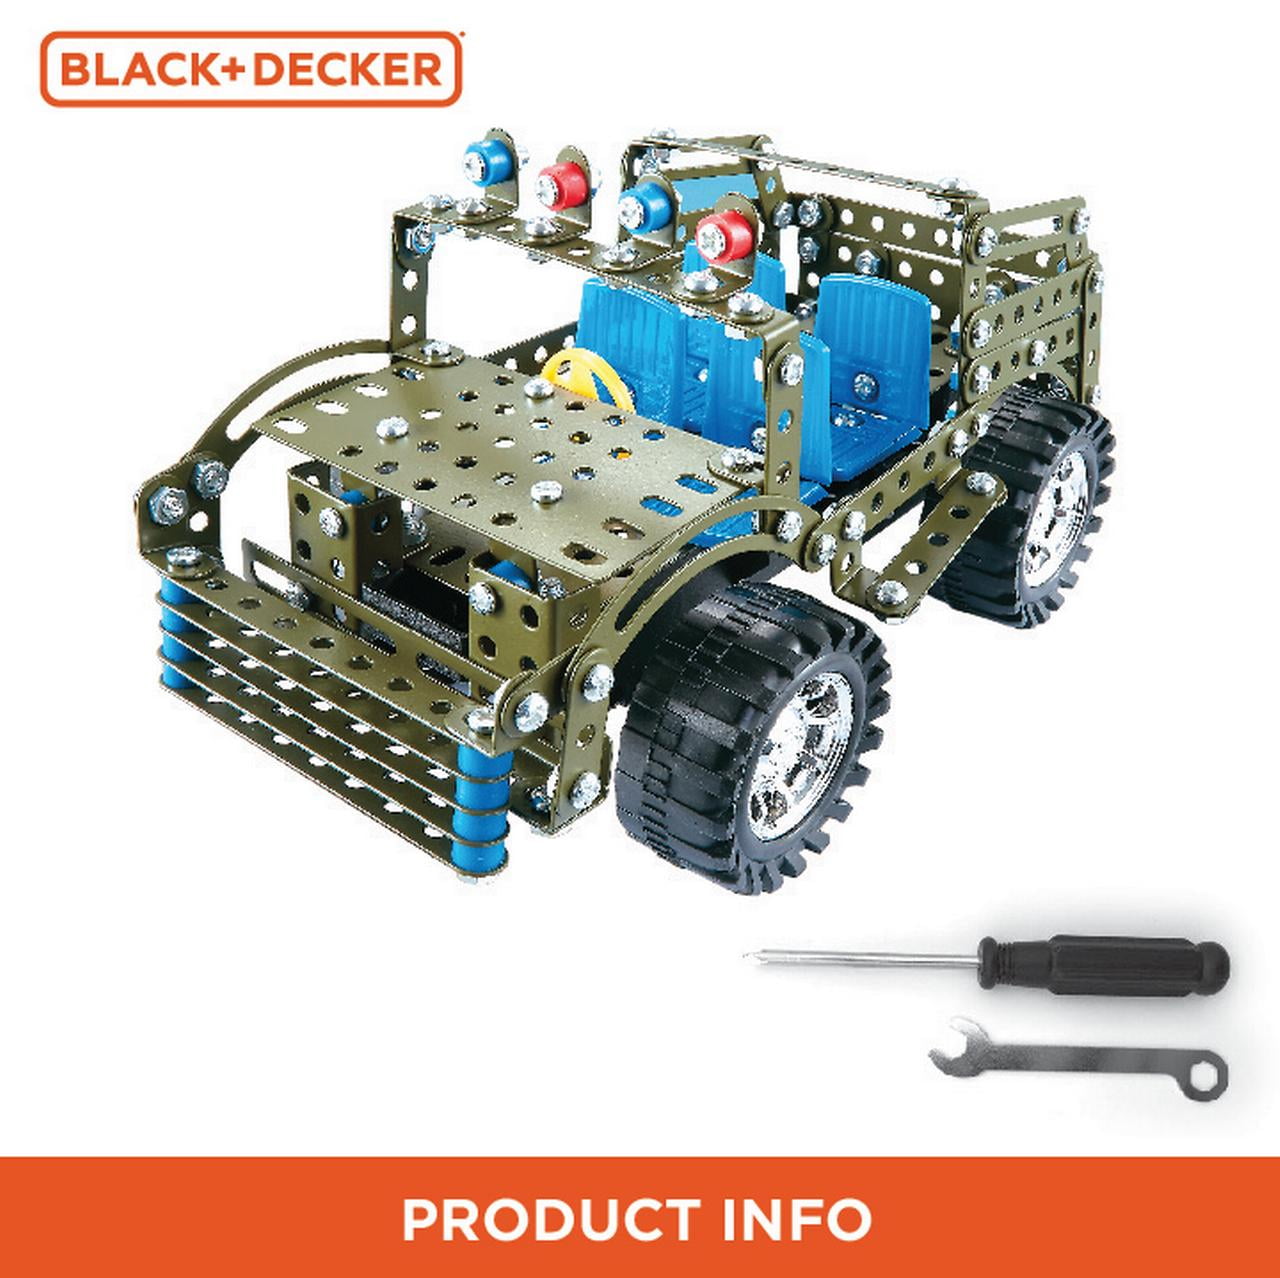 Official Black & Decker Toy 185163: Buy Online on Offer